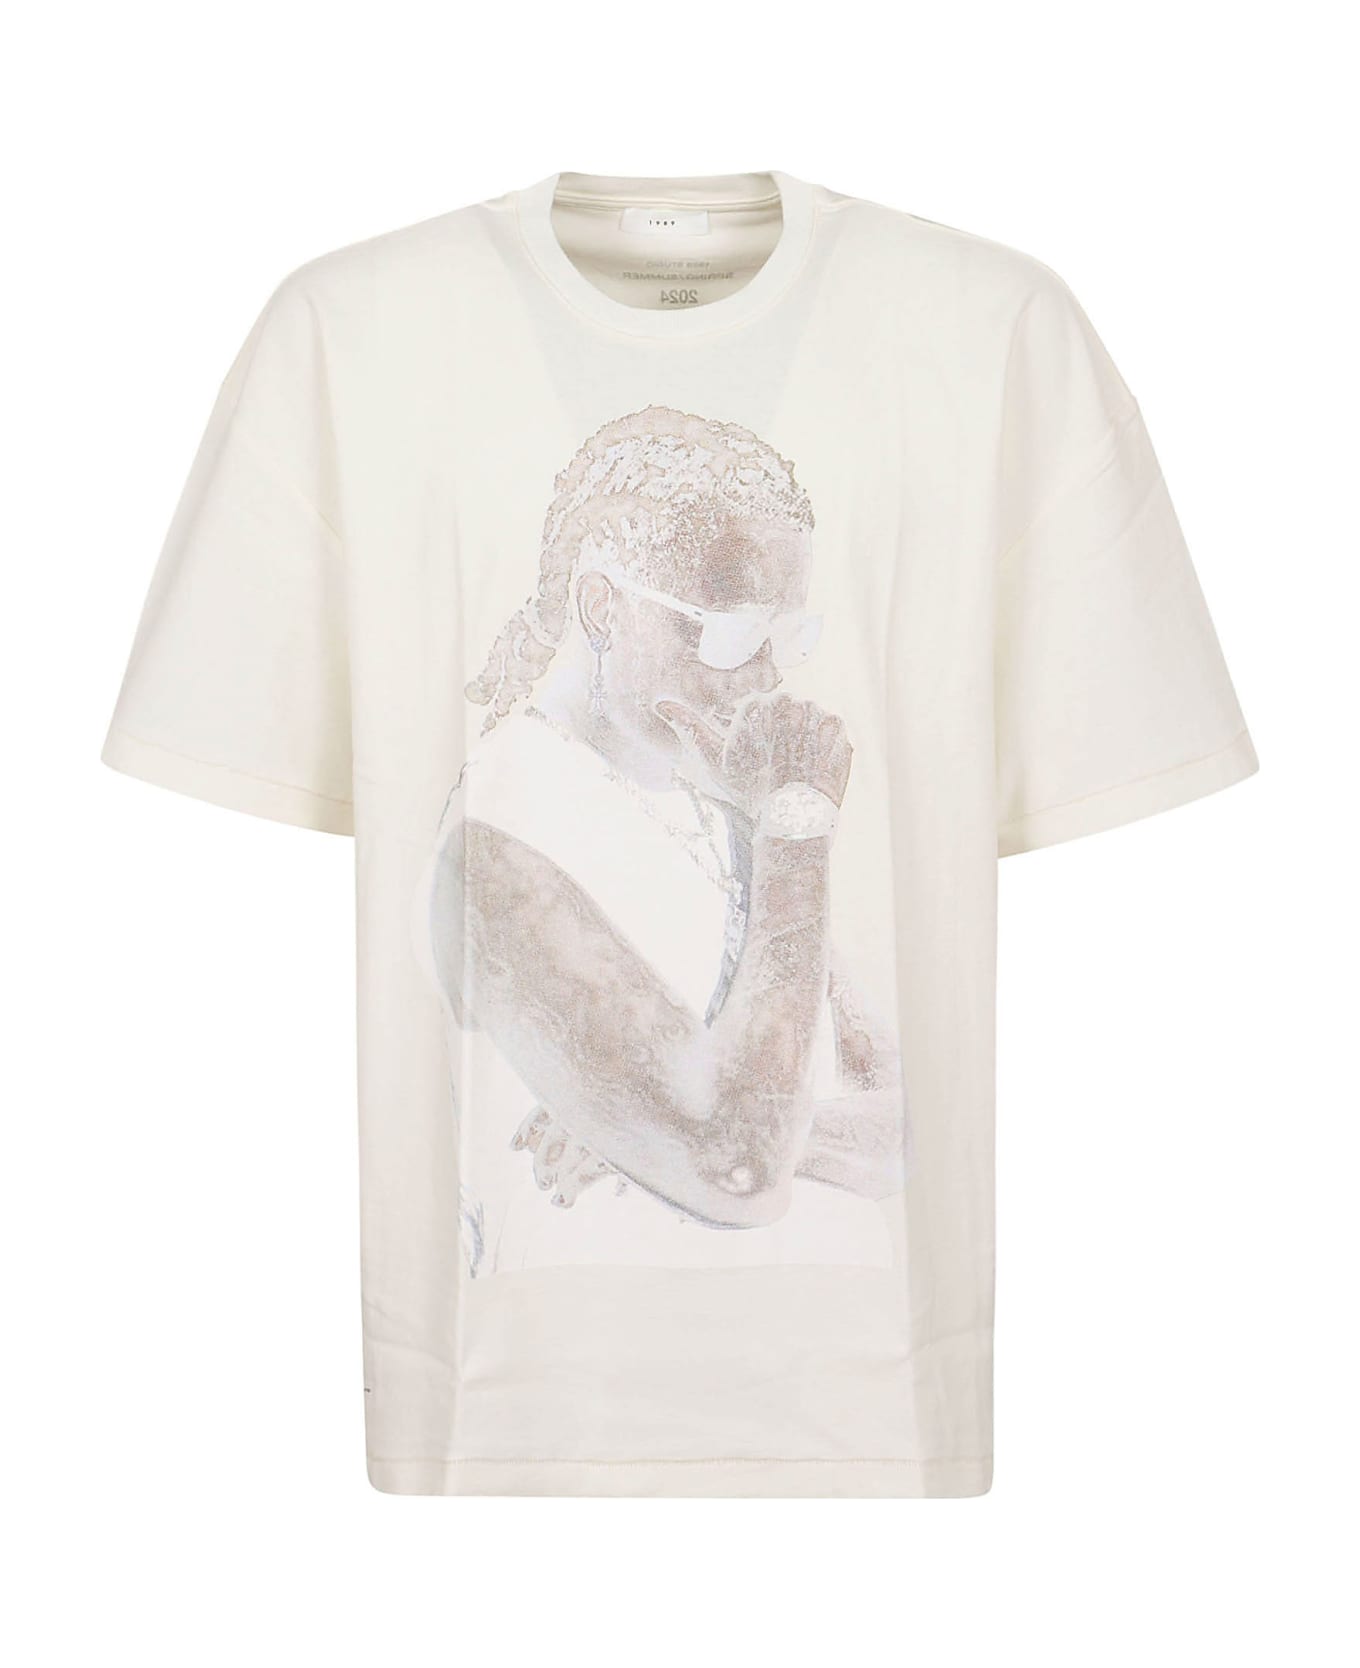 1989 Studio Slime T-shirt - Vintage White